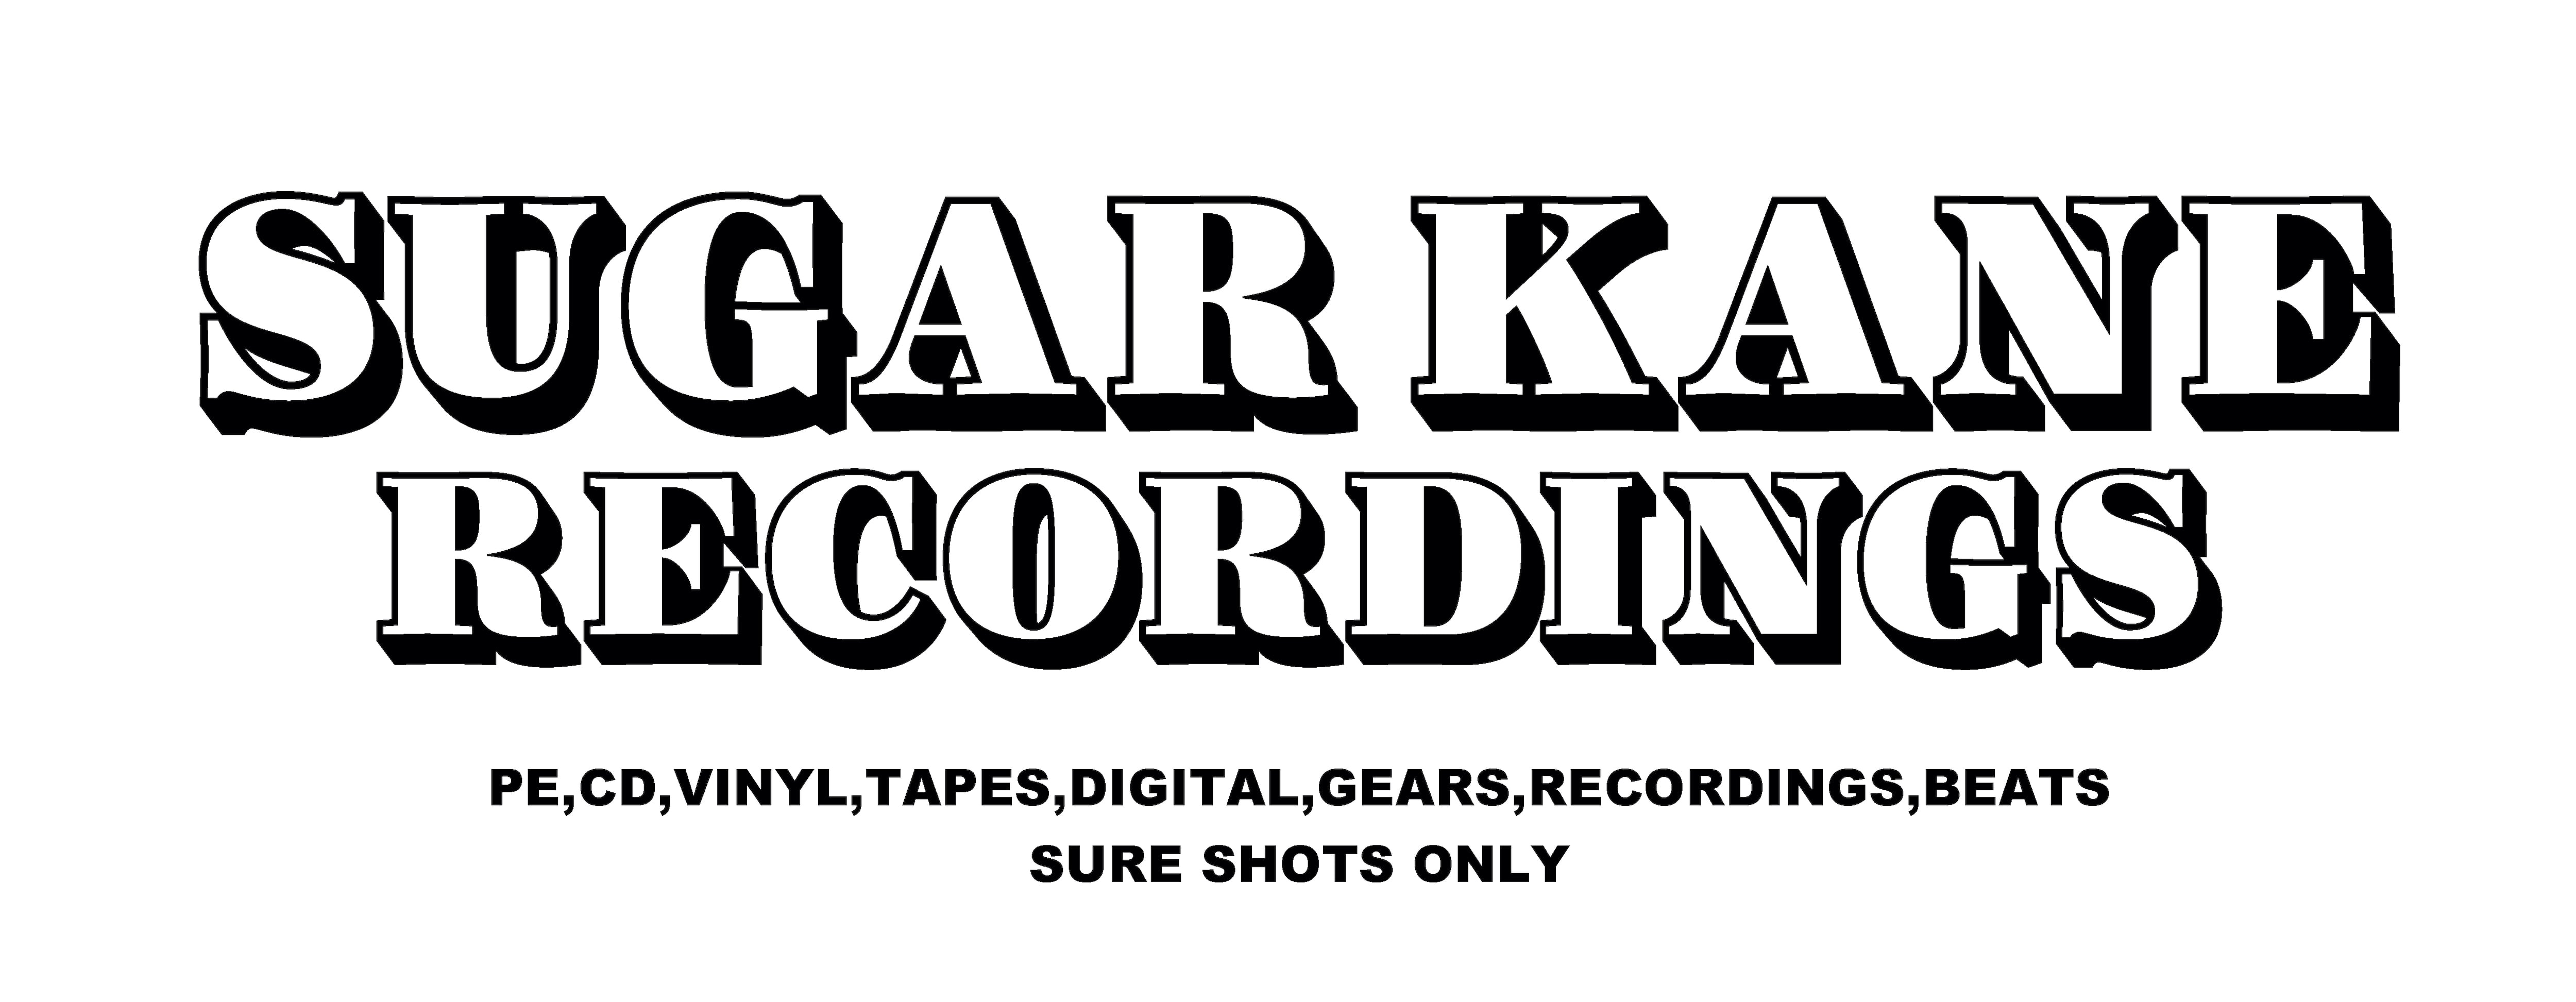 Sugar Kane Recordings